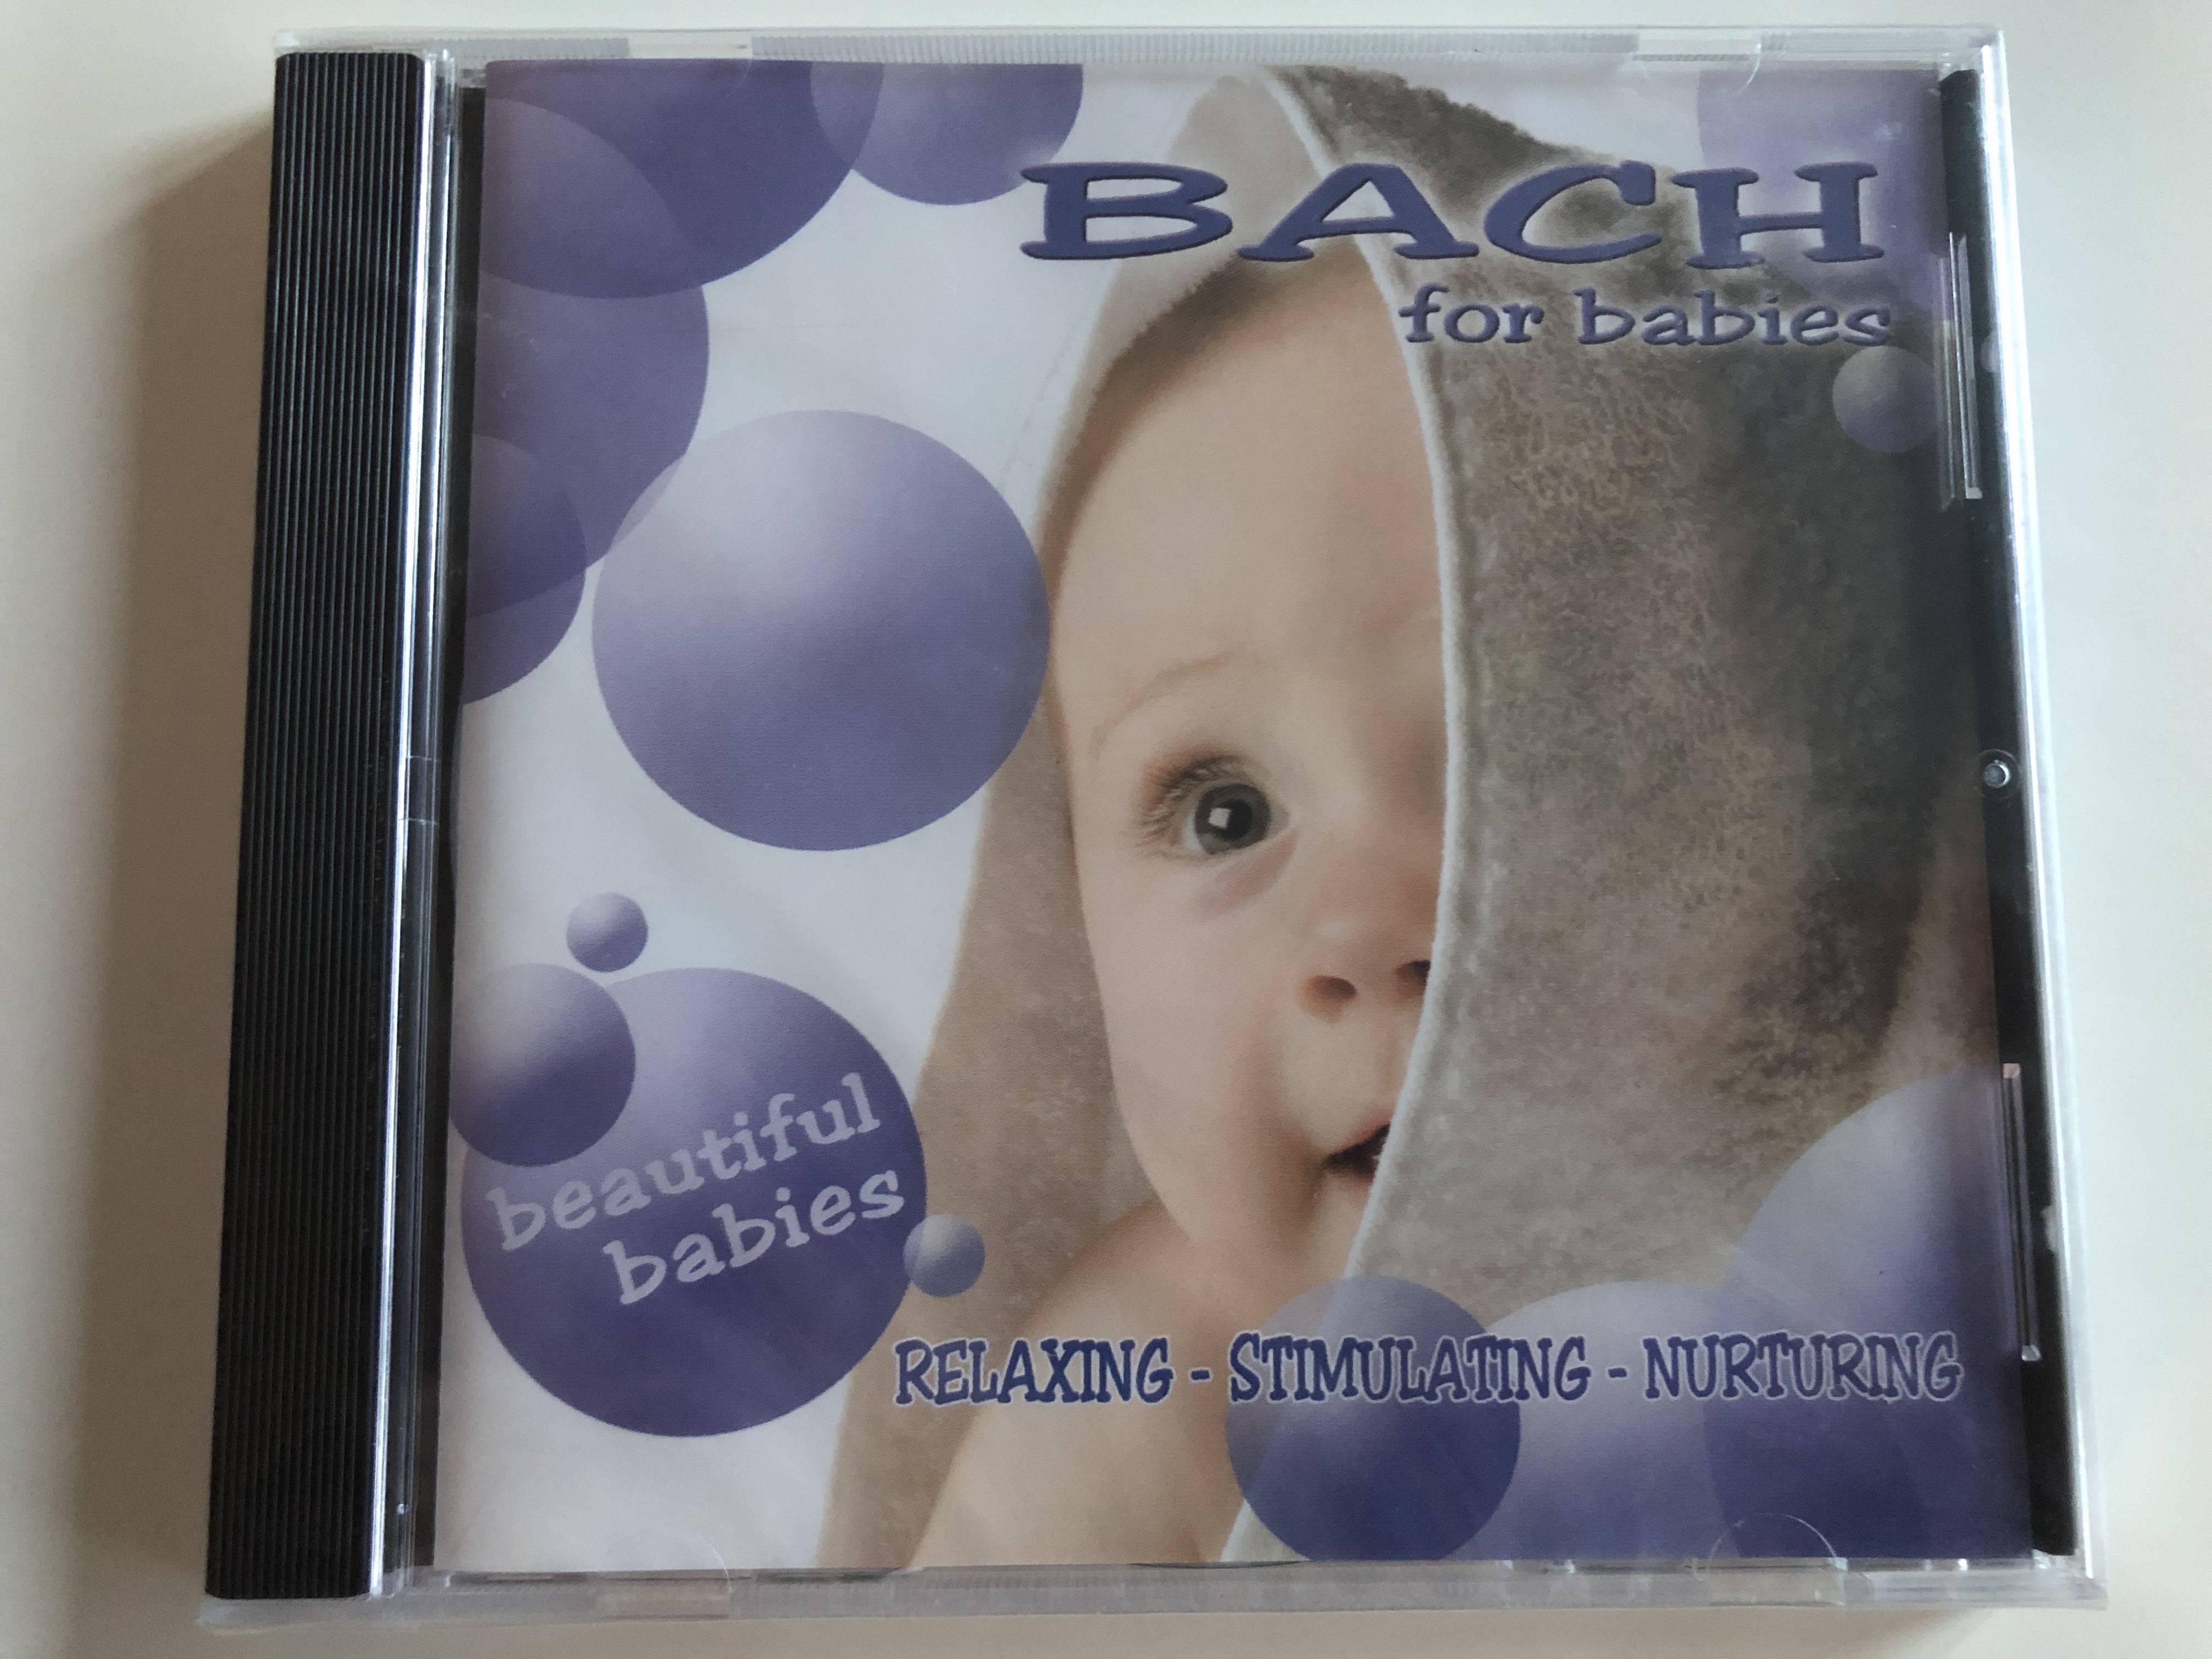 bach-for-babies-relaxing-stimulating-nurturing-beautiful-babies-audio-cd-2008-lmm-7020032-1-.jpg